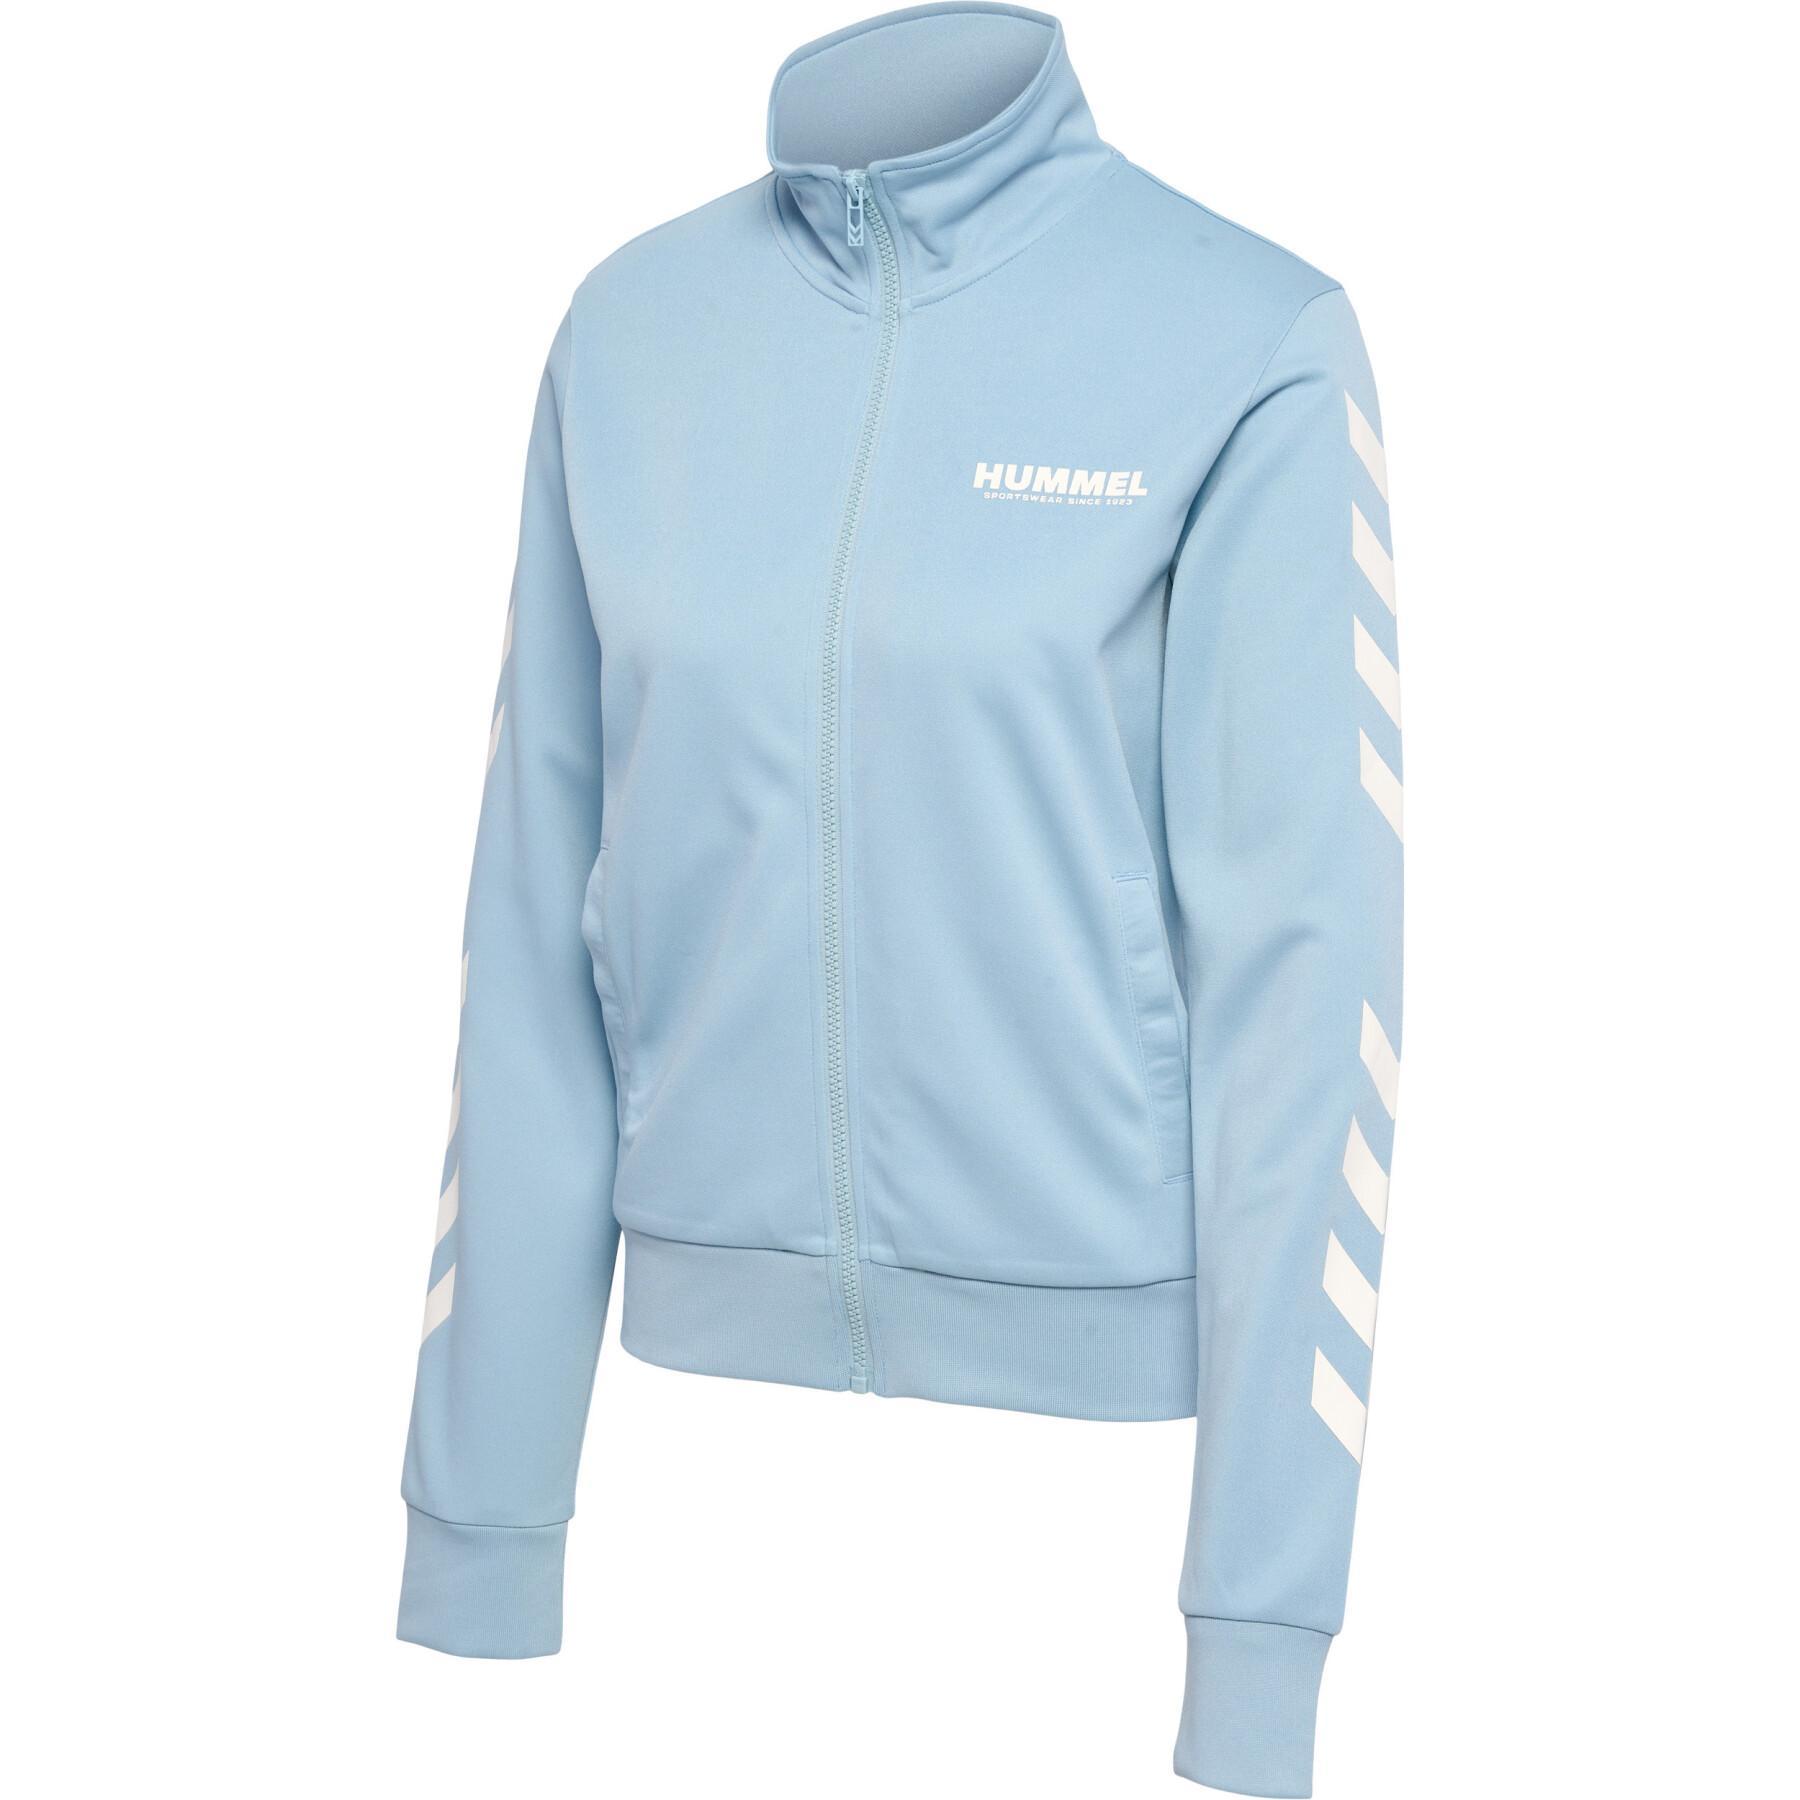 Women's zip-up tracksuit jacket Hummel Legacy - Hummel - Brands -  Volleyball wear